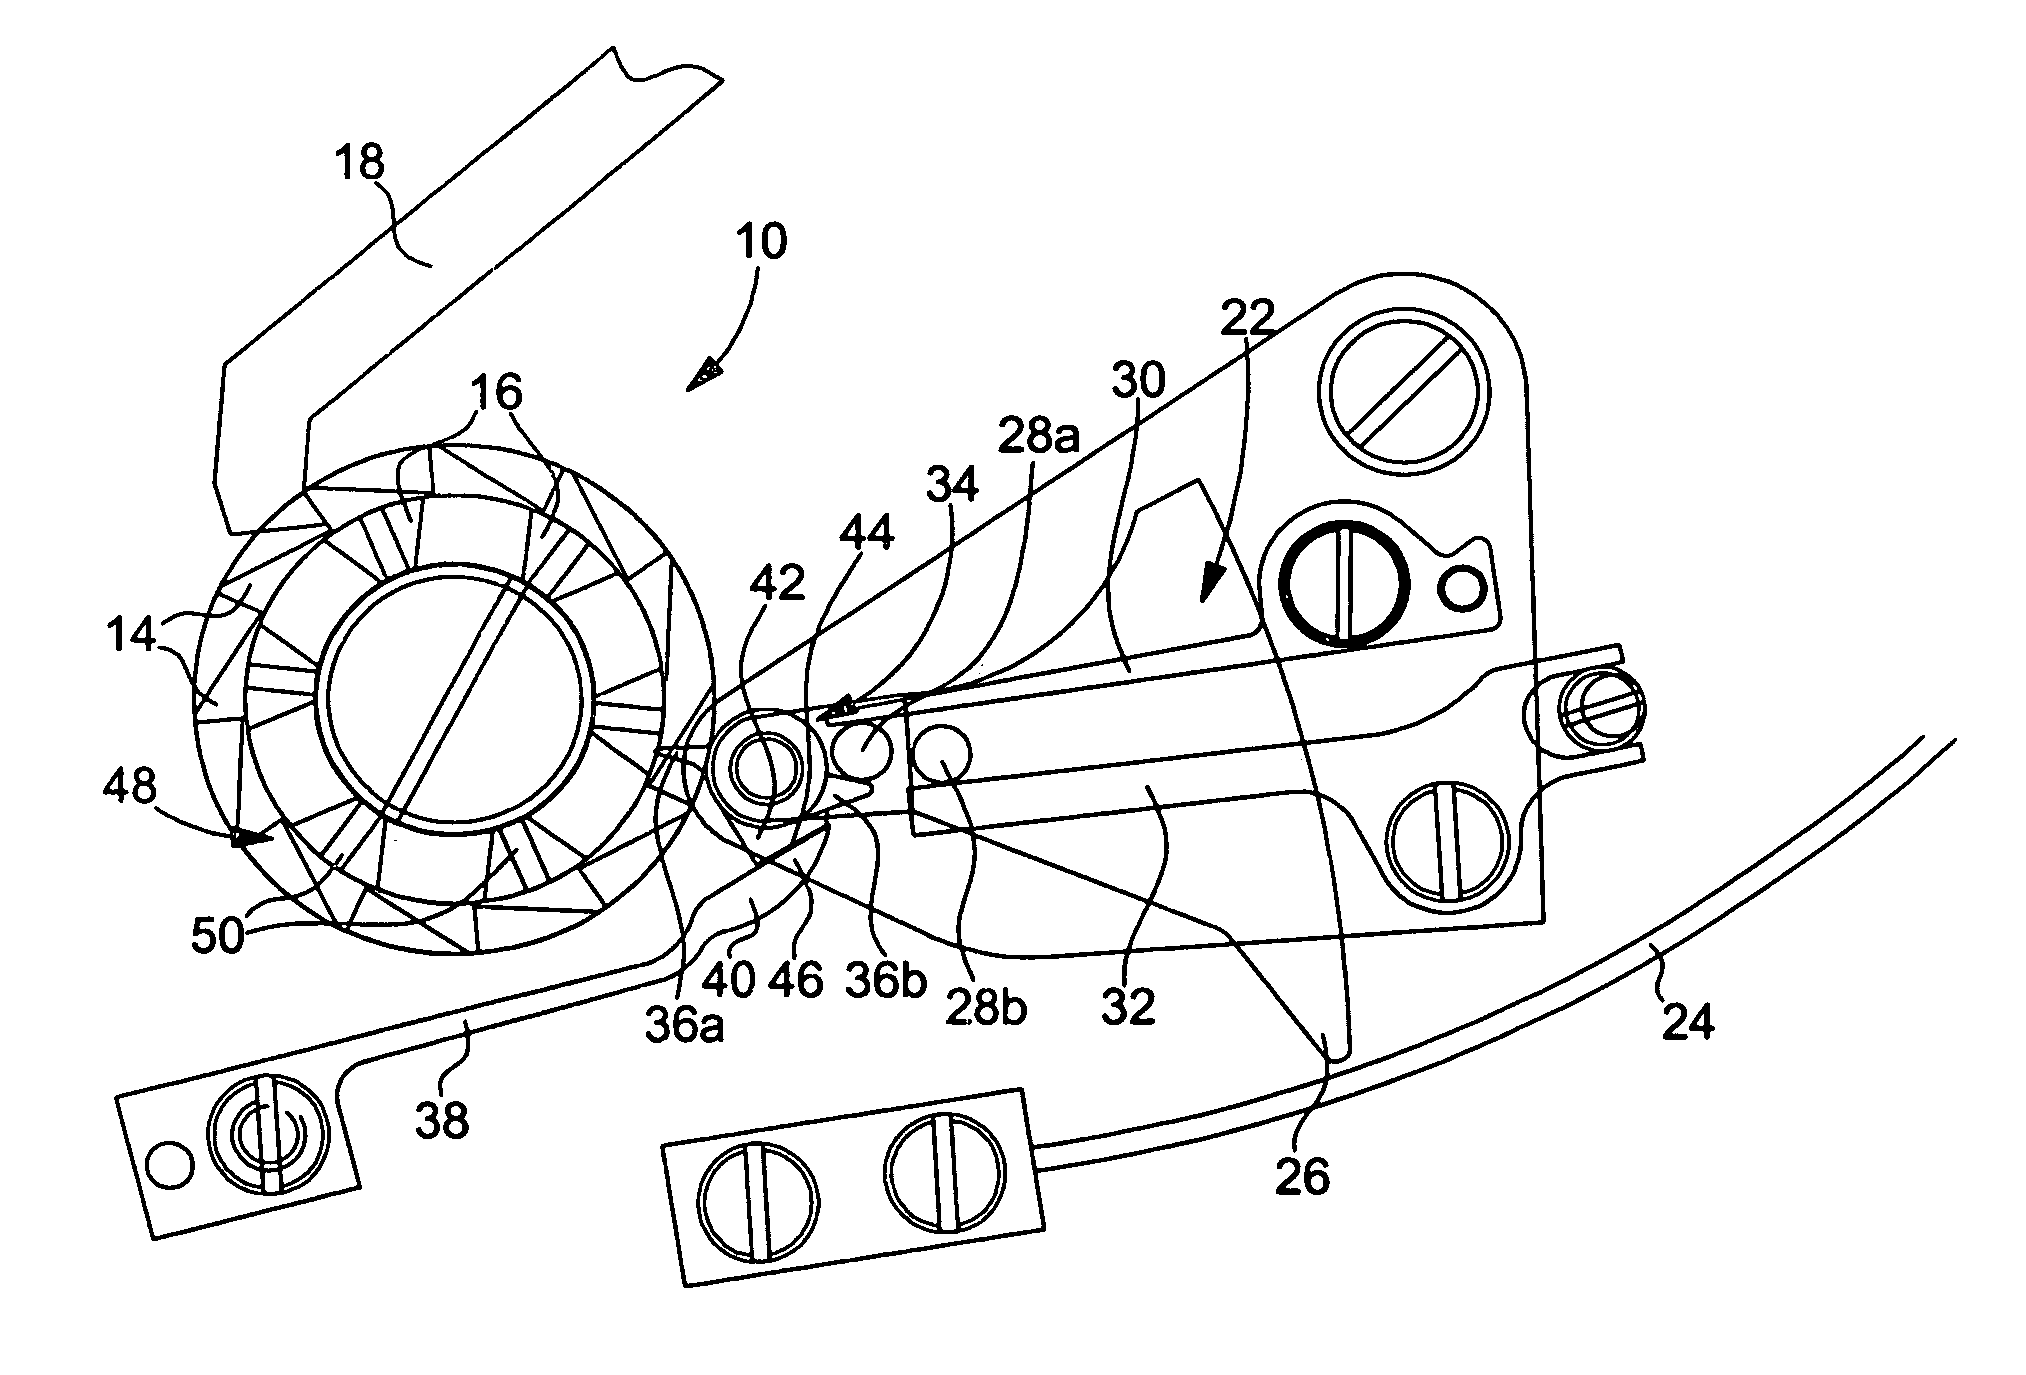 Instrument for measuring intervals of time comprising a ringing mechanism